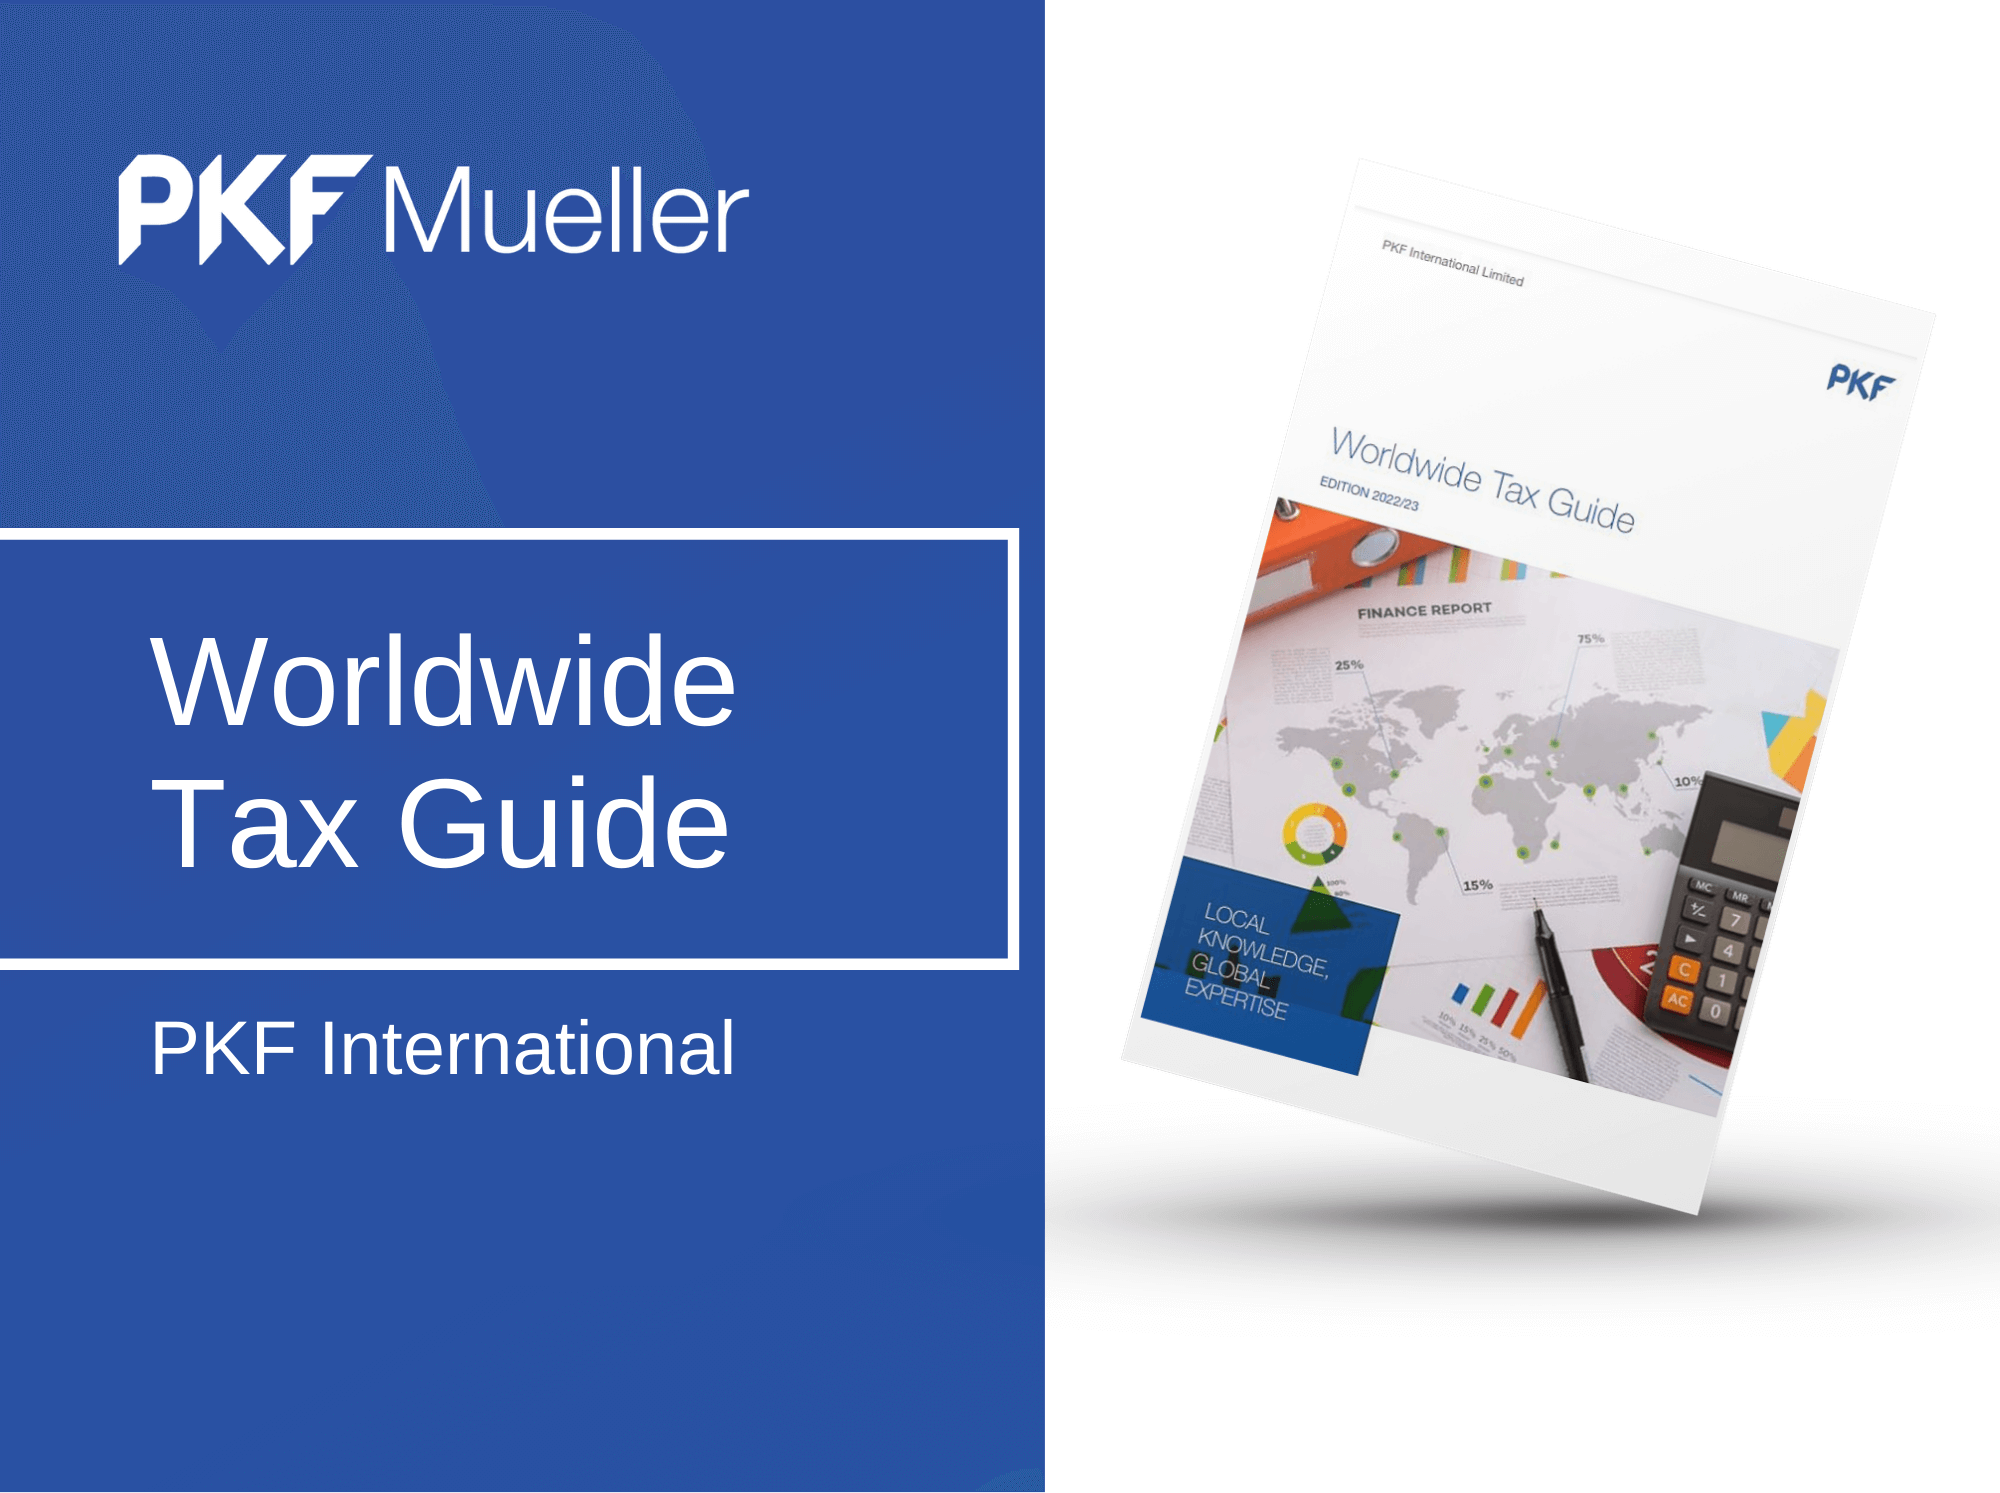 PKF International's Worldwide Tax Guide